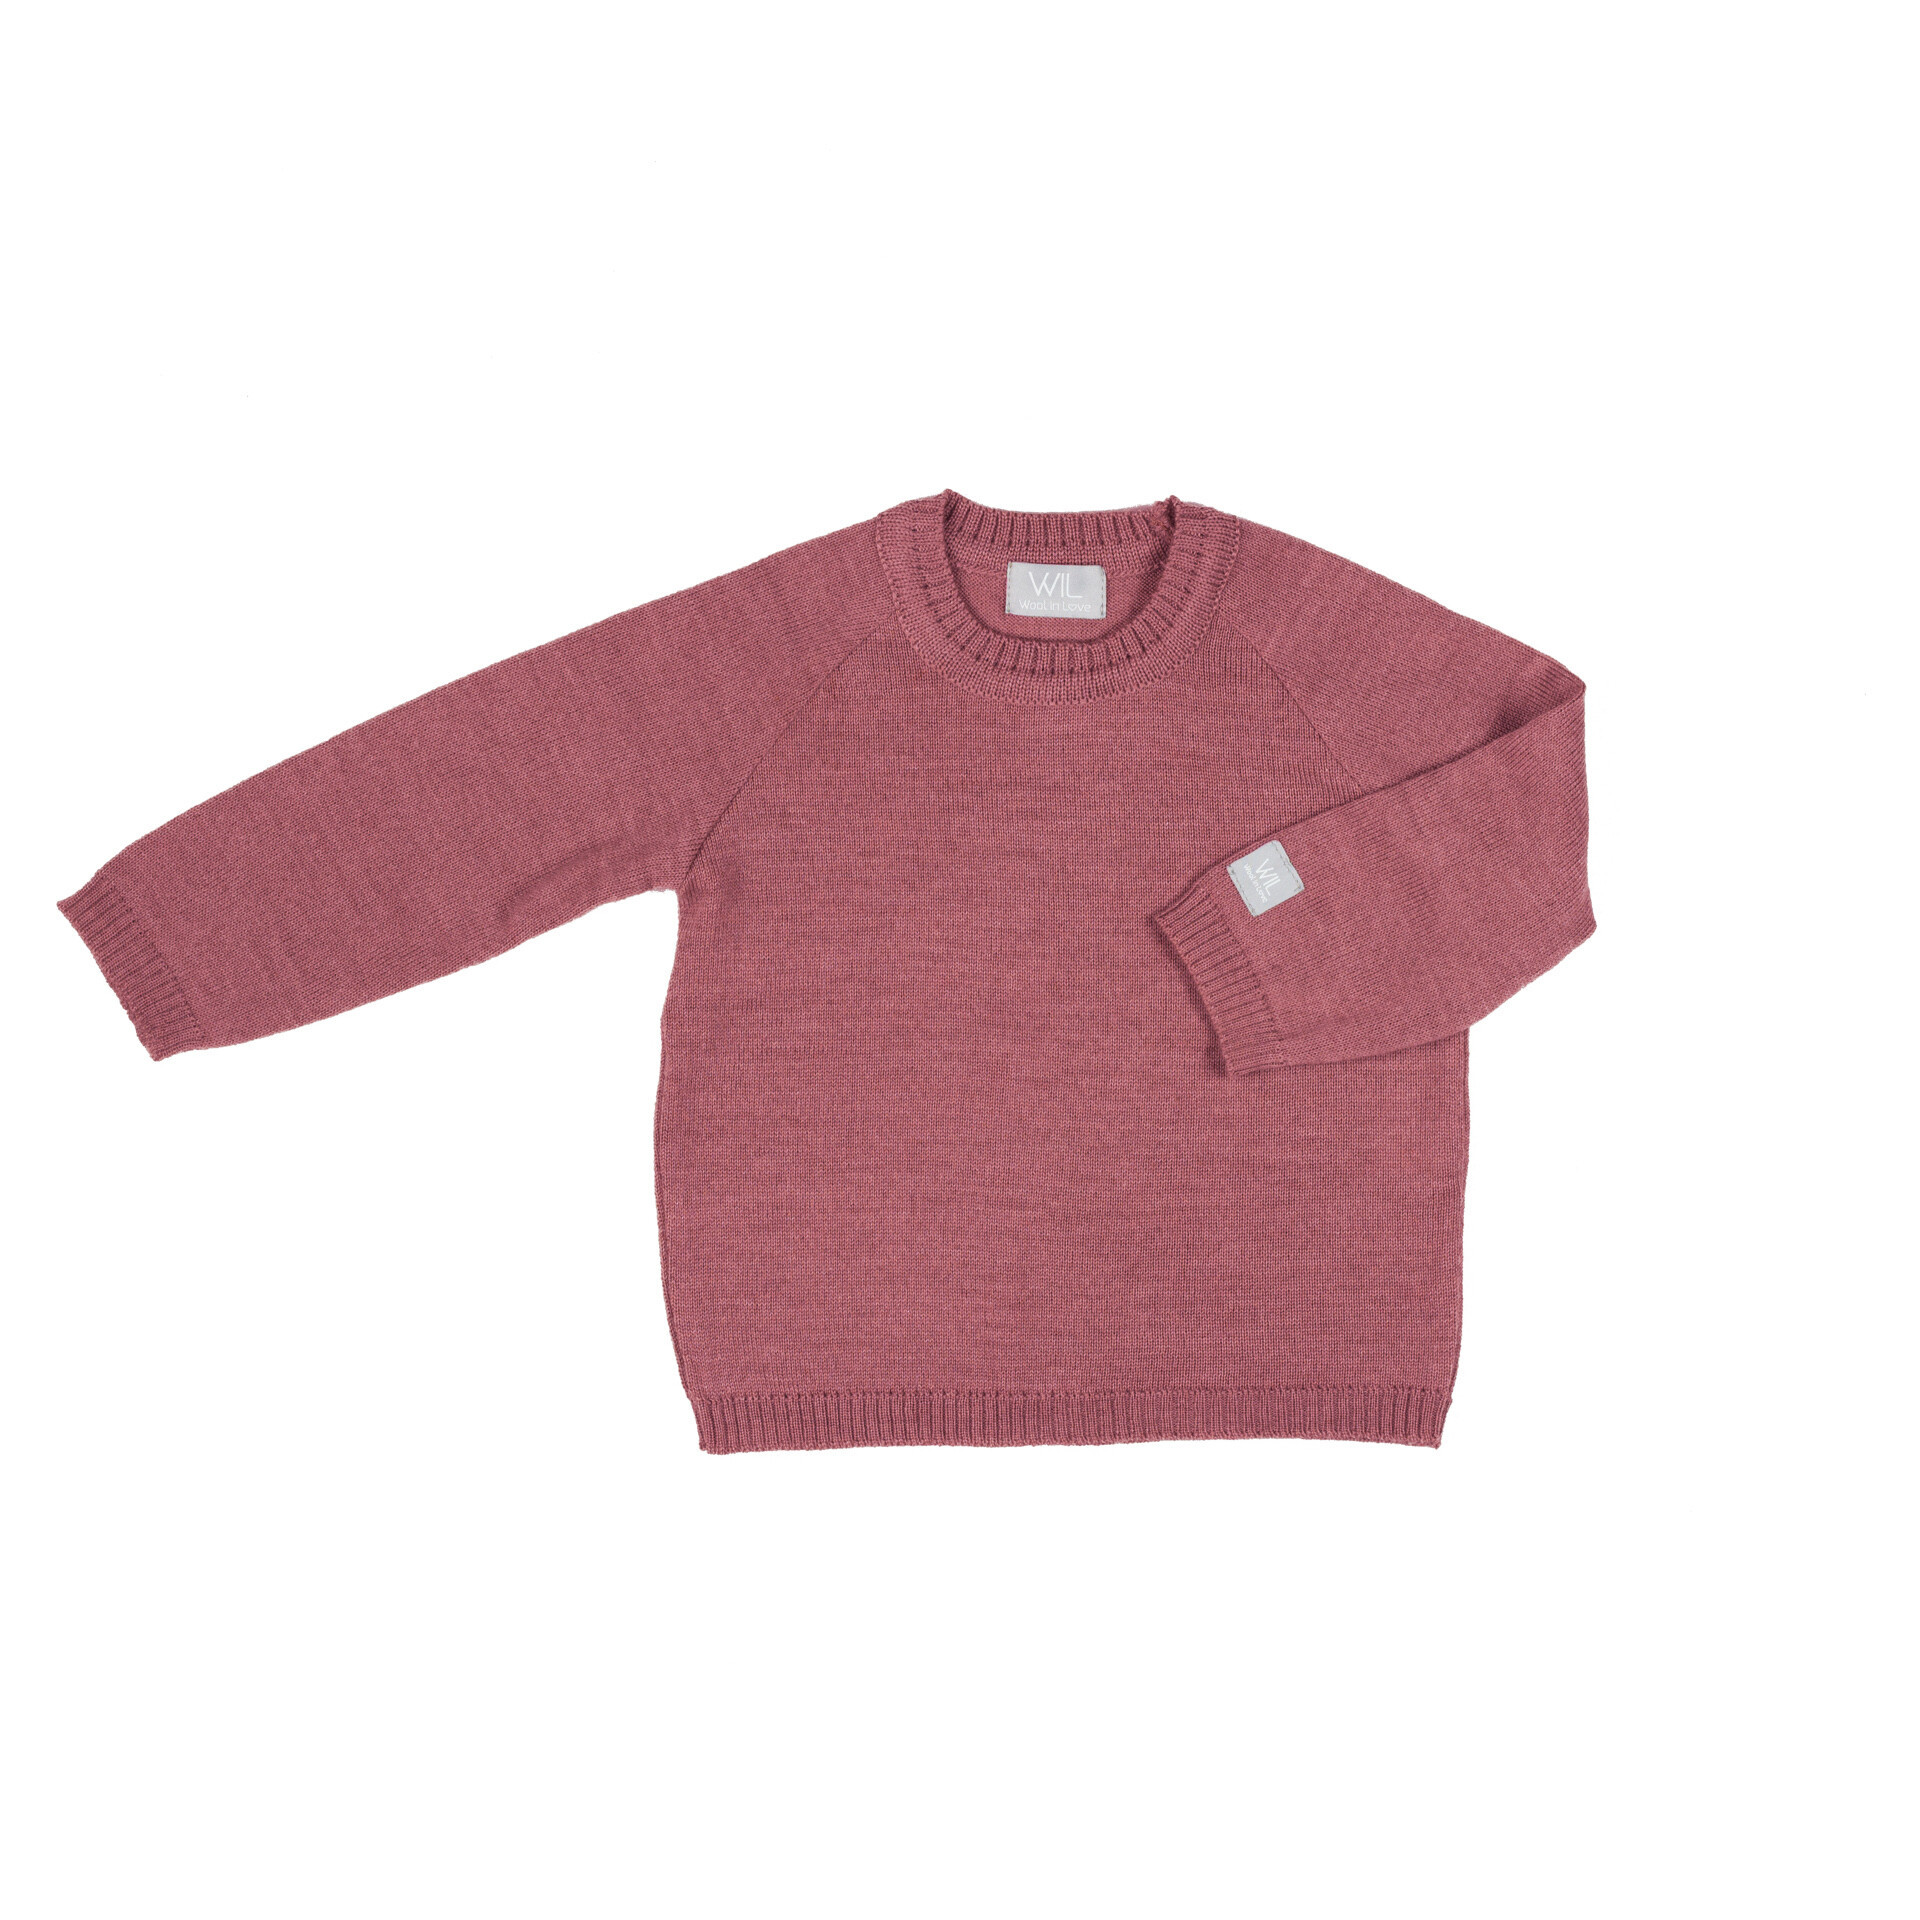 Merino sweater JOY - Plum Pink - 86